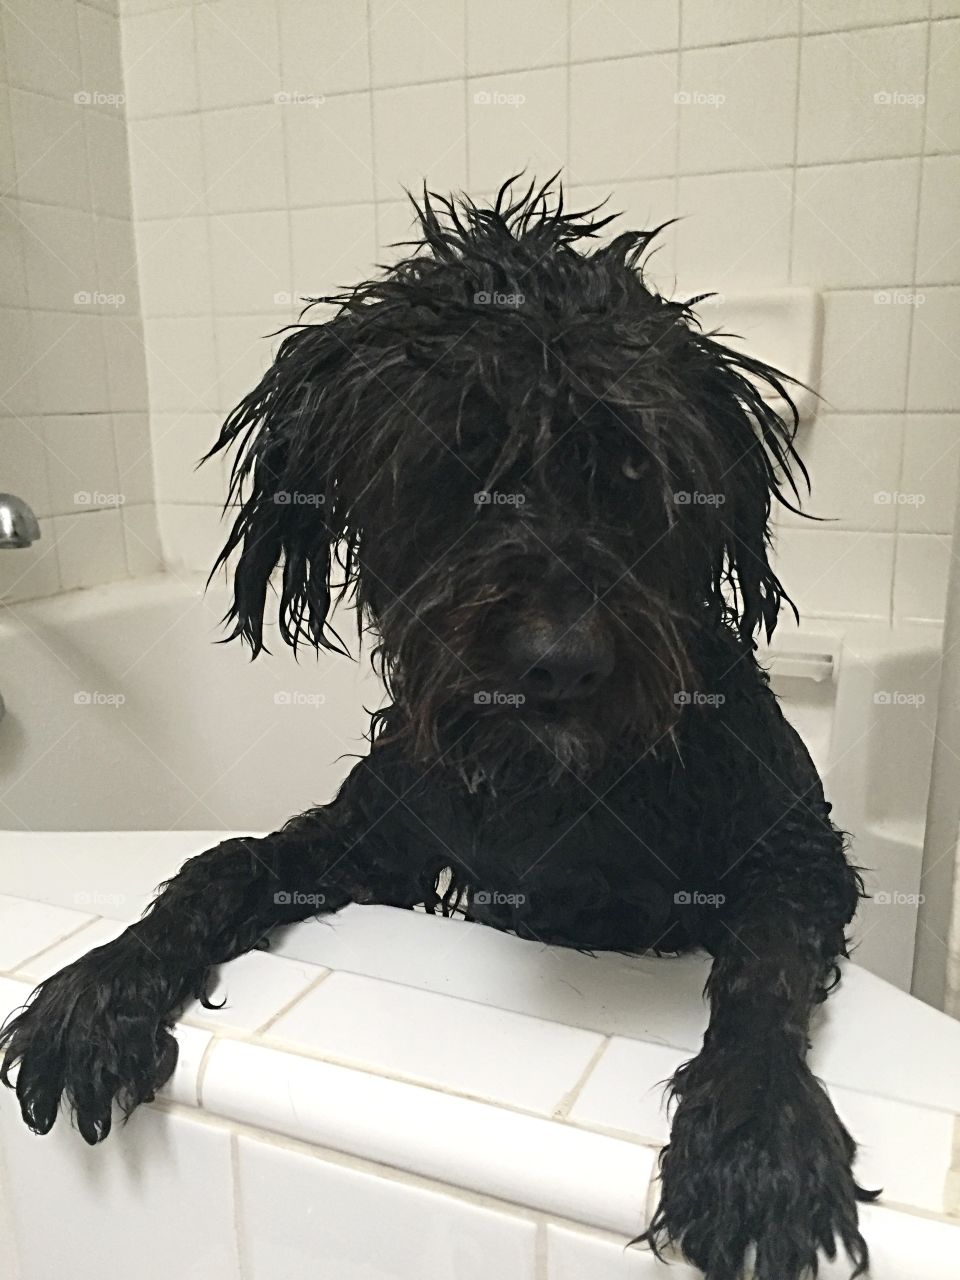 Black poodle in bathtub